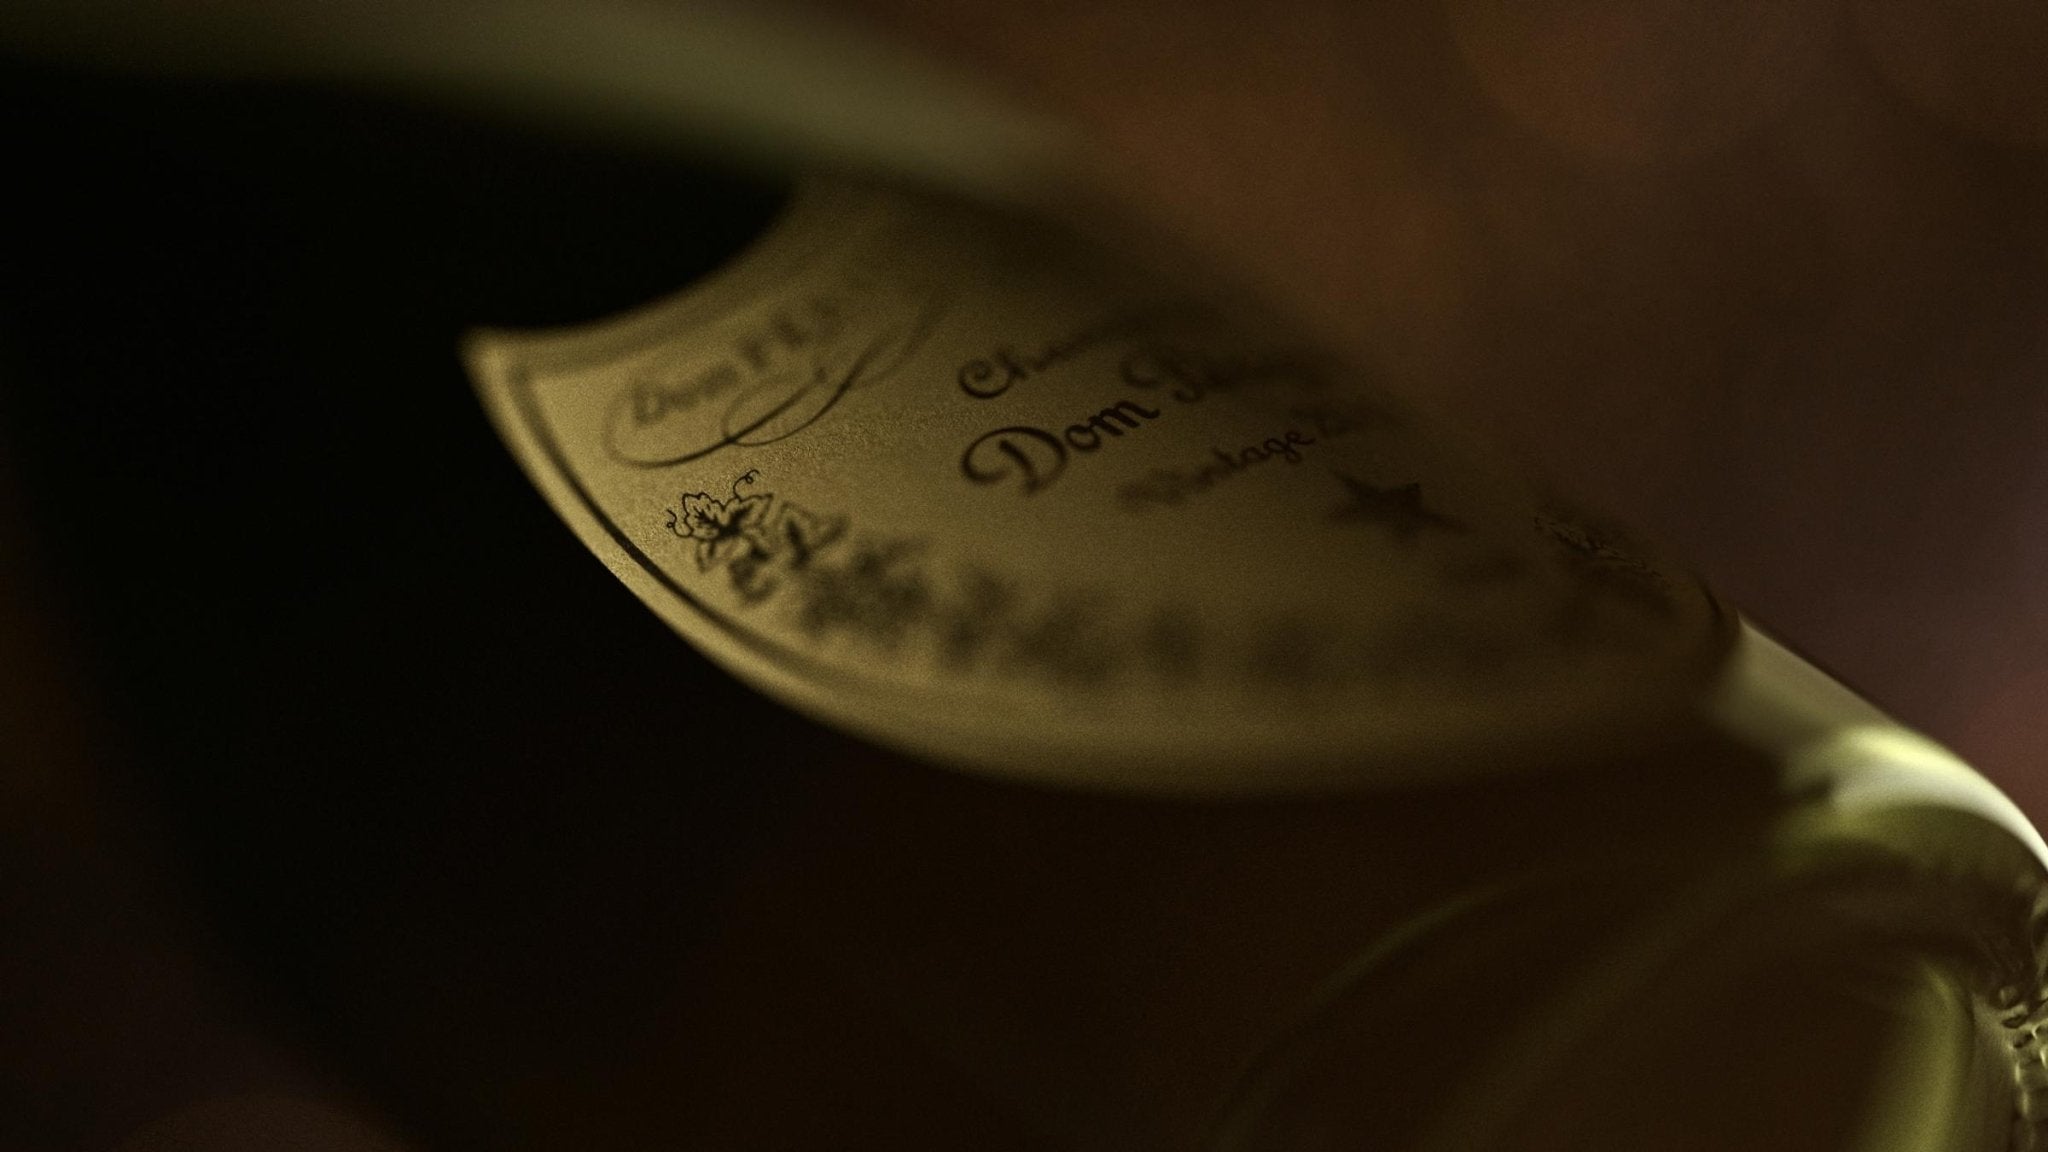 Dom Perignon Brut Vintage Champagne 2013